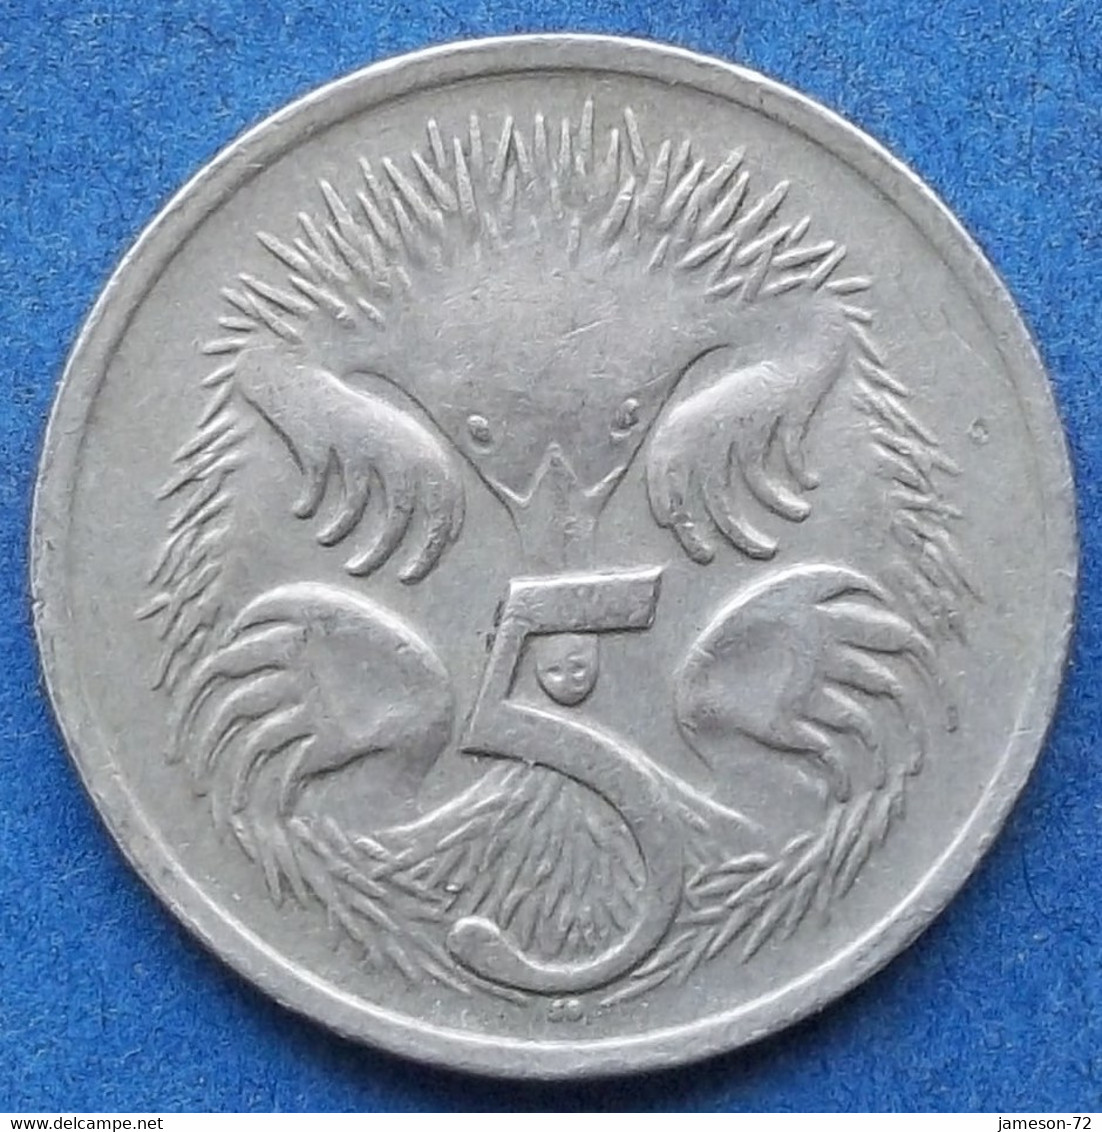 AUSTRALIA - 5 Cents 1968 "echidna" KM# 64 Elizabeth II Decimal Coinage (1971-2022) - Edelweiss Coins - 5 Cents